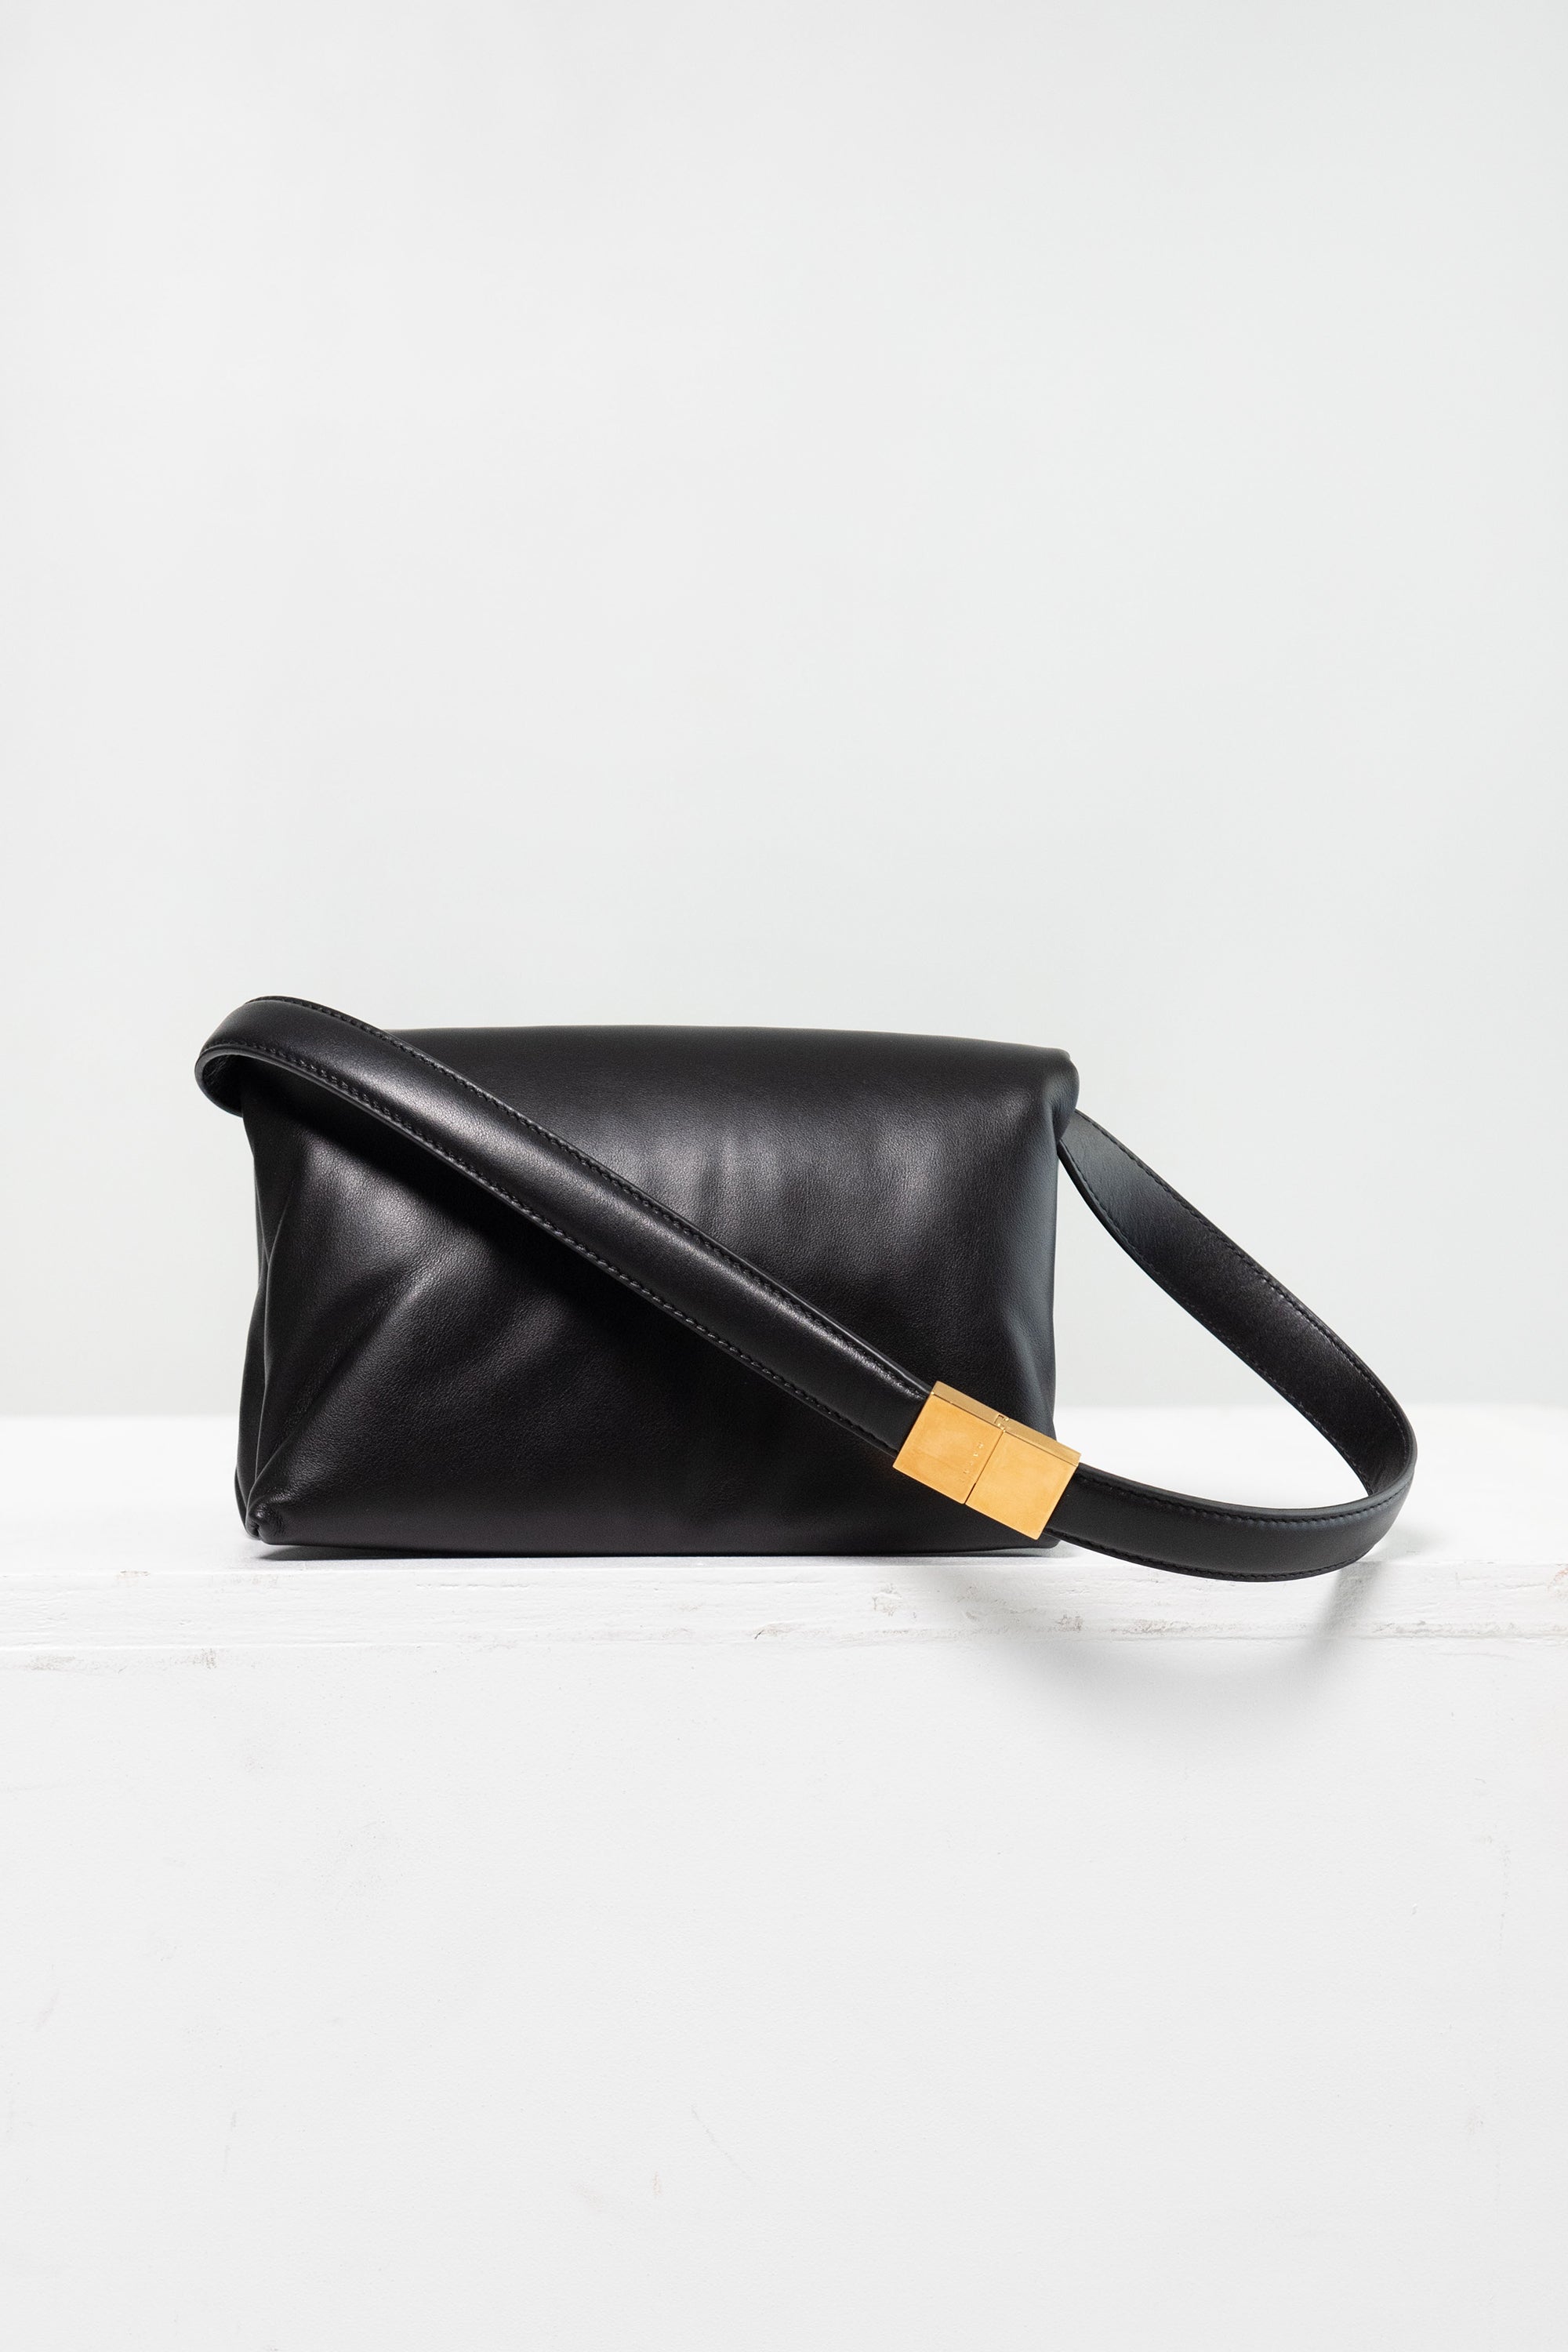 The Black Bag, The Latest Fashion Bag, - China Bags and Ms Shoulder Bag  price